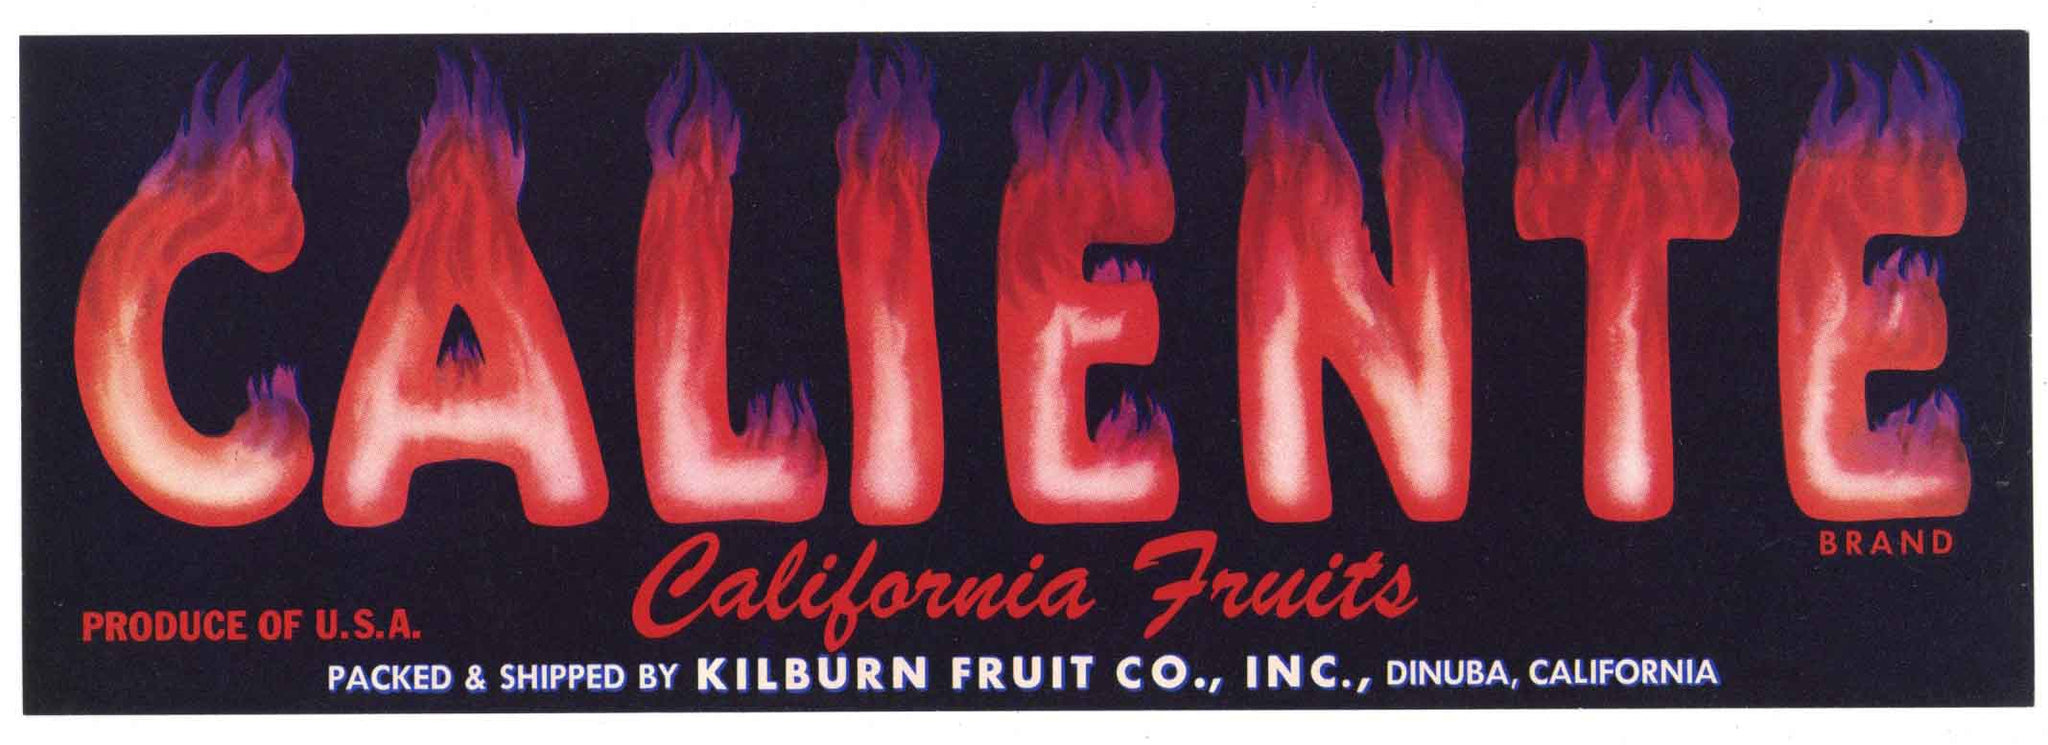 Caliente Brand Vintage Fruit Crate Label